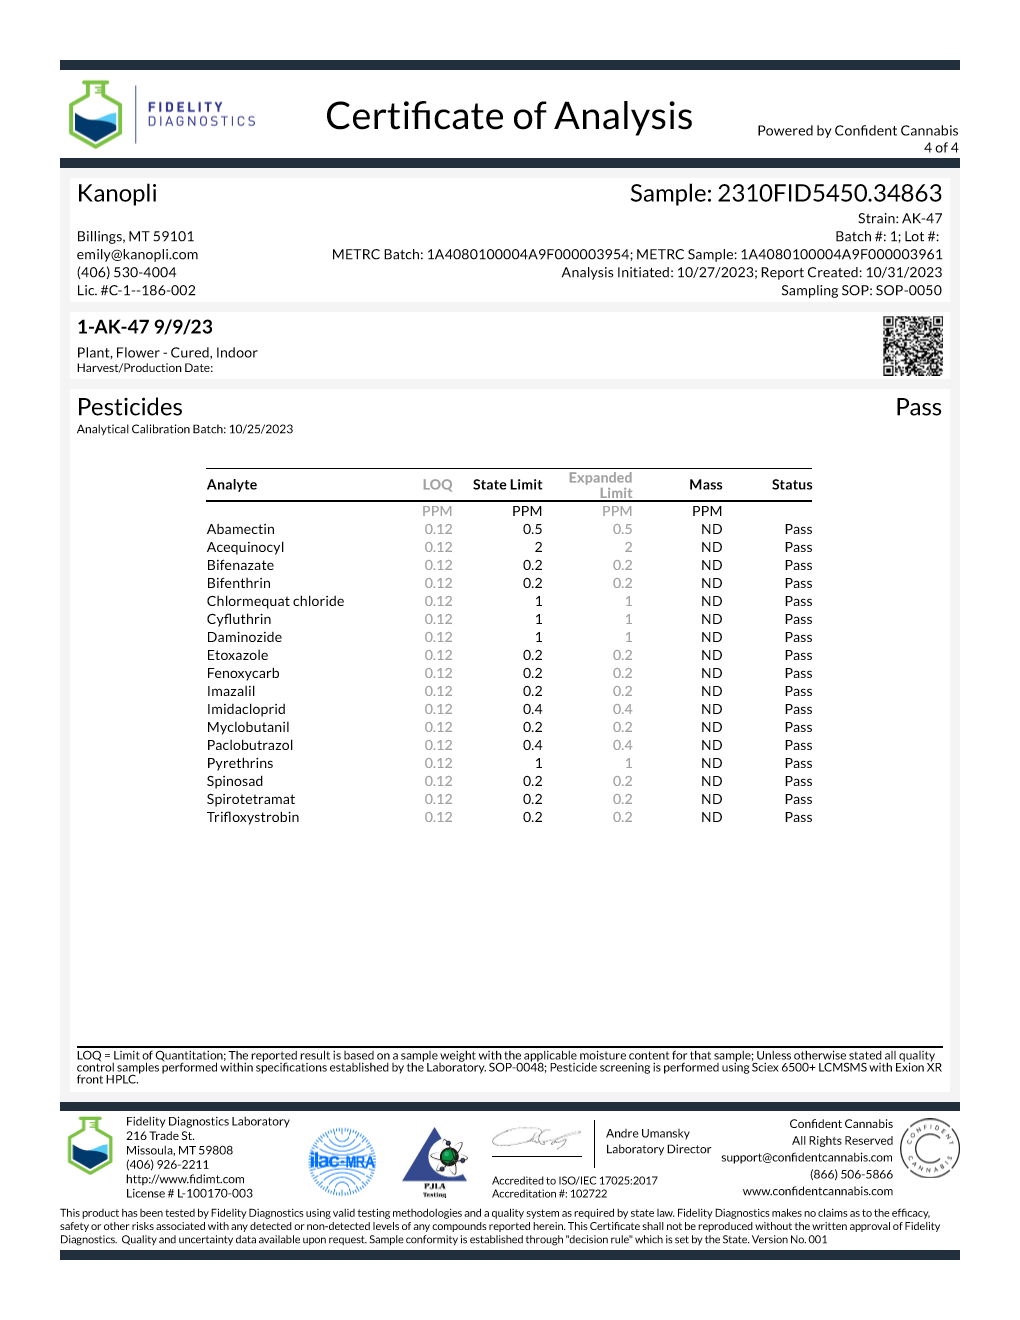 AK-47 - Sativa 29% THC (Sept. 2023) shorties (2.5 grams)